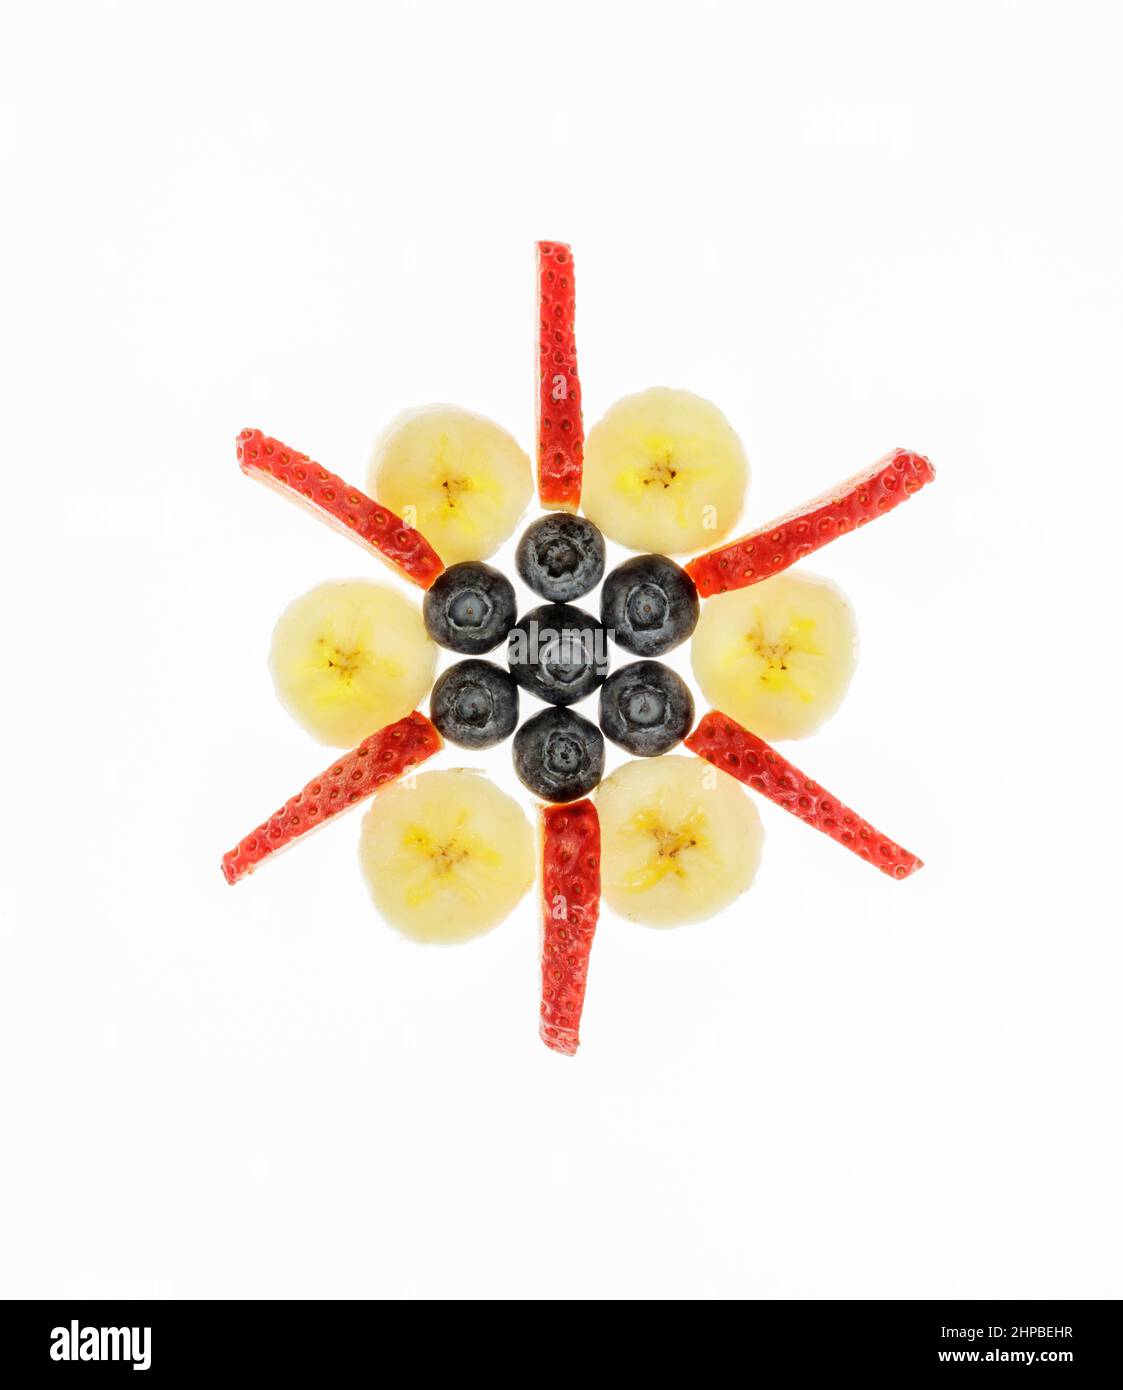 Frische Erdbeeren, Blaubeeren und Banane in Sternform angeordnet Stockfoto